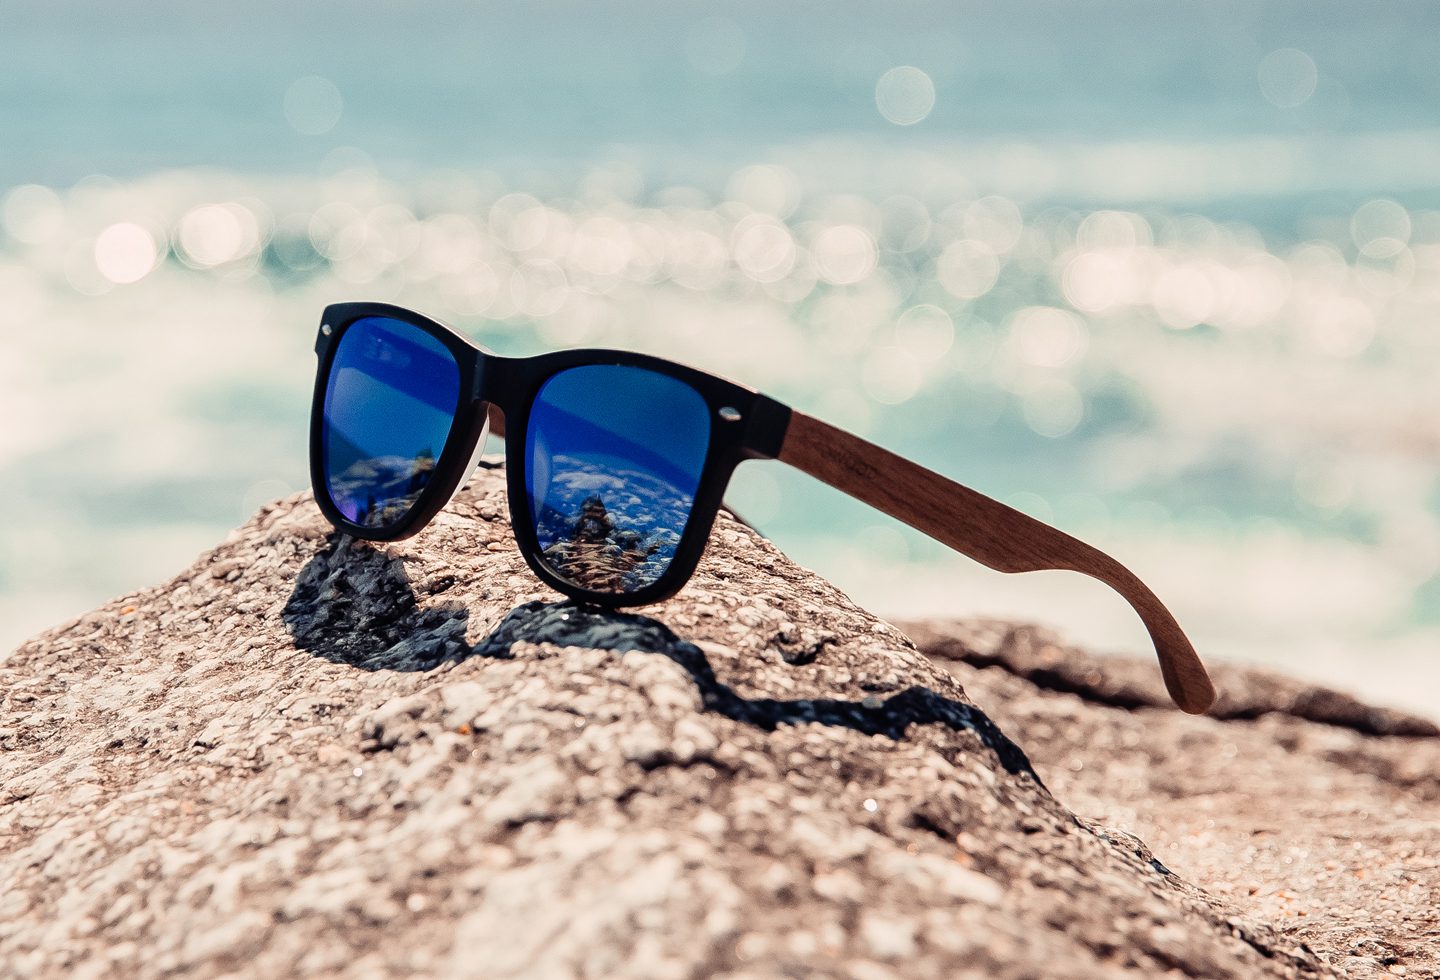 Walnut wood sunglasses with blue mirrored polarized lenses